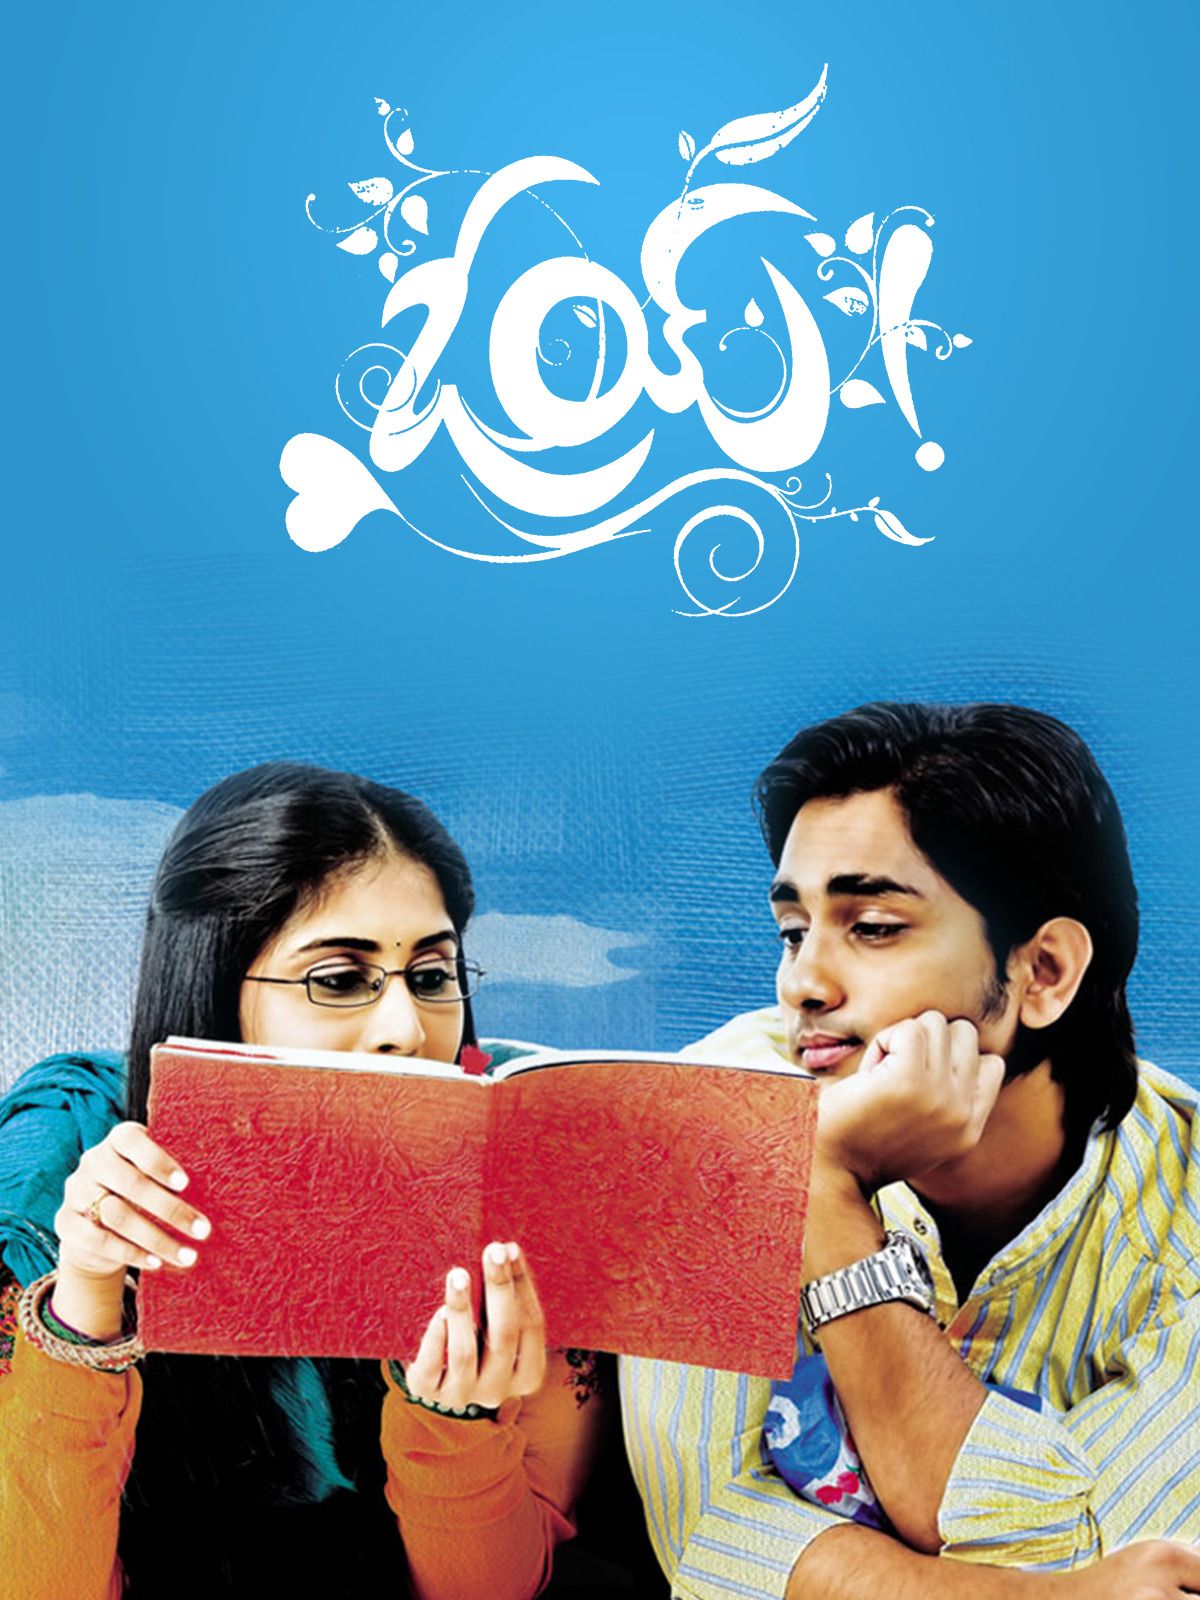 Oy (2009) Hindi Dubbed Full Movie